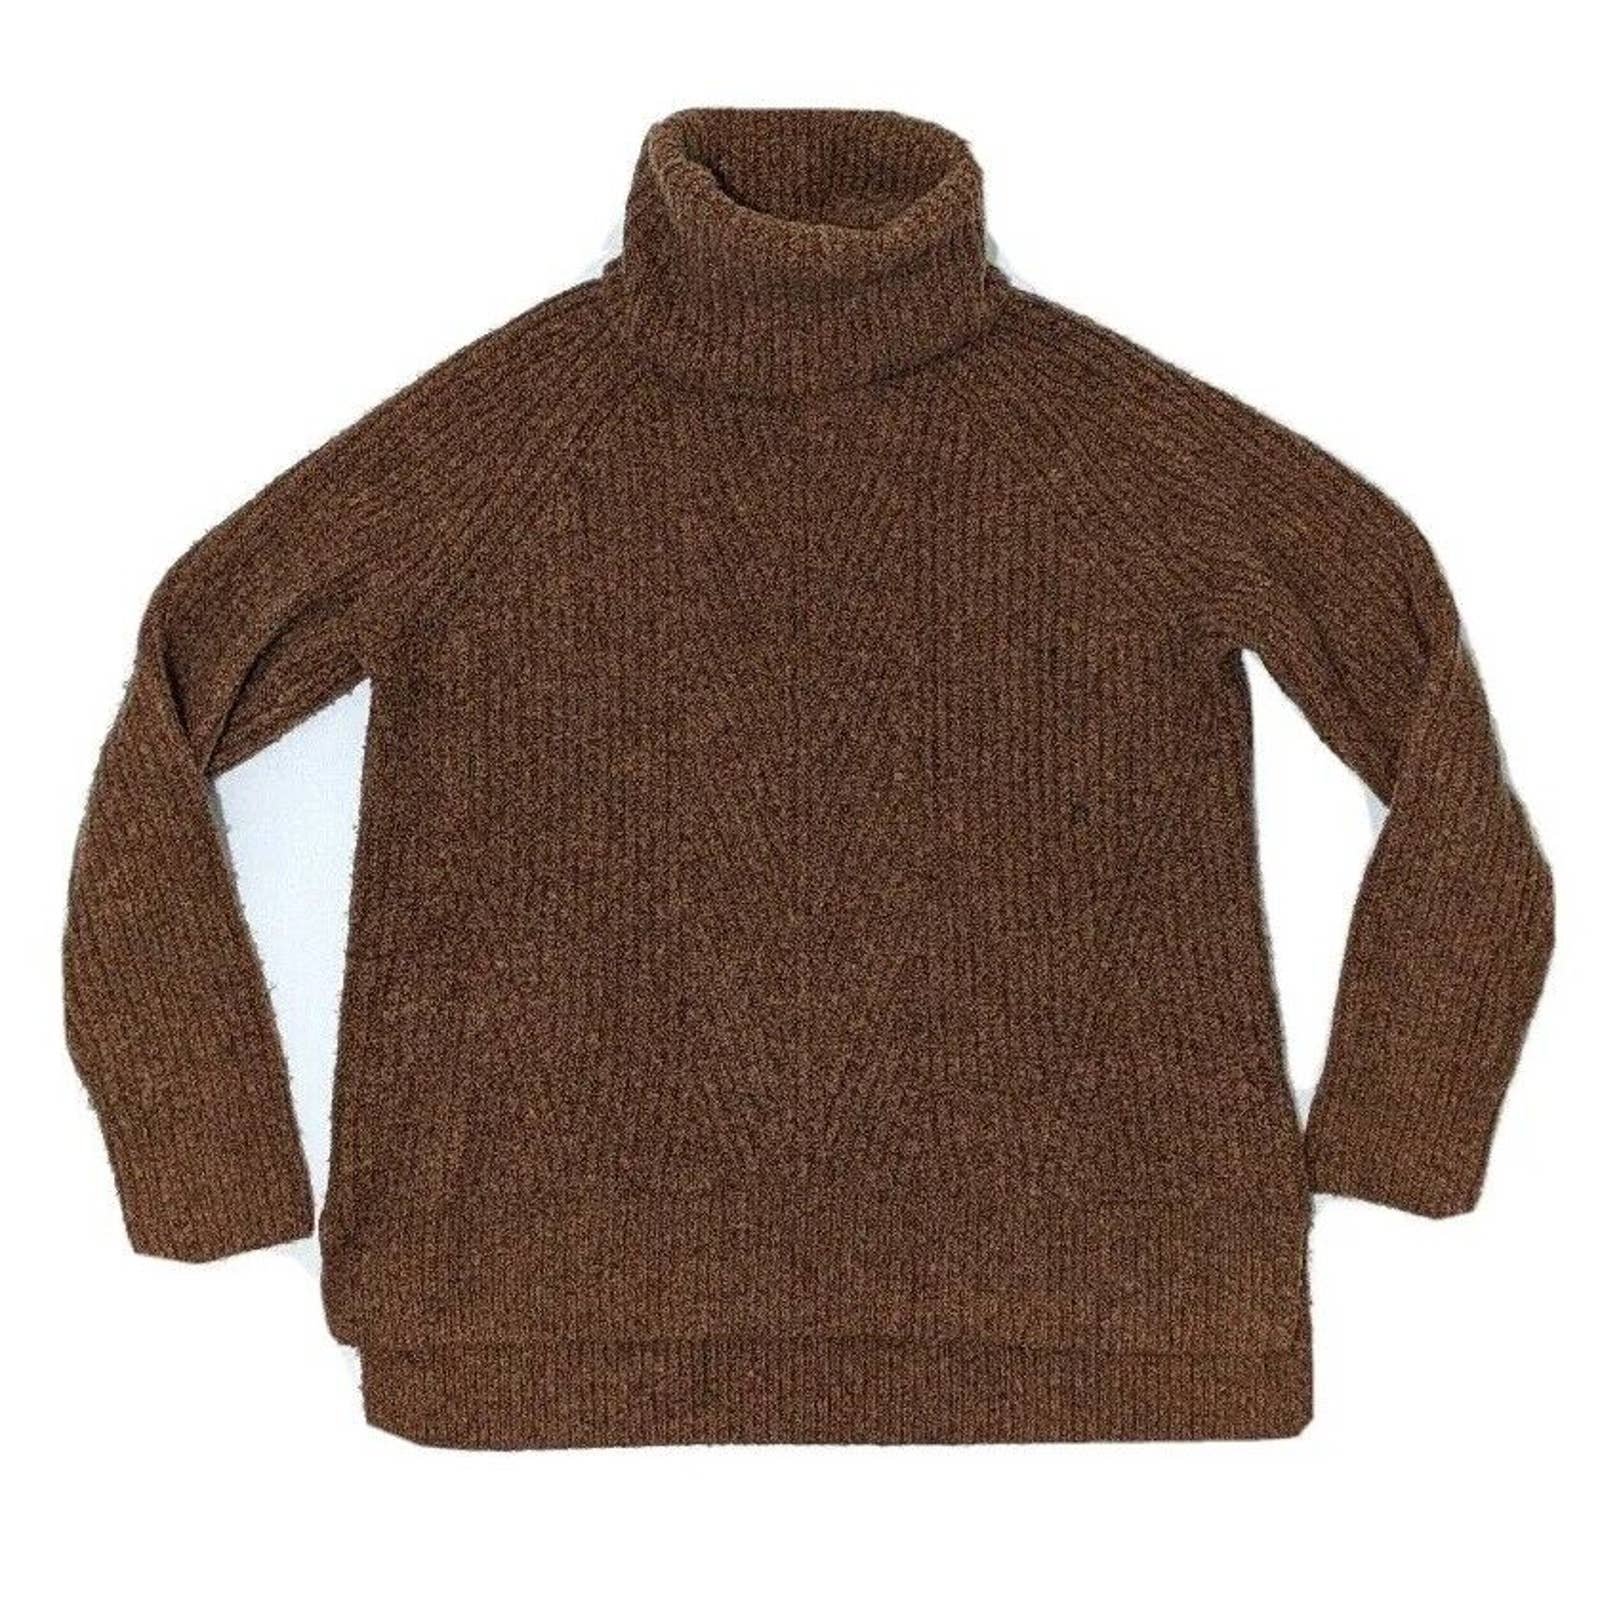 good price Madewell Mercer Turtleneck Sweater in Cozies